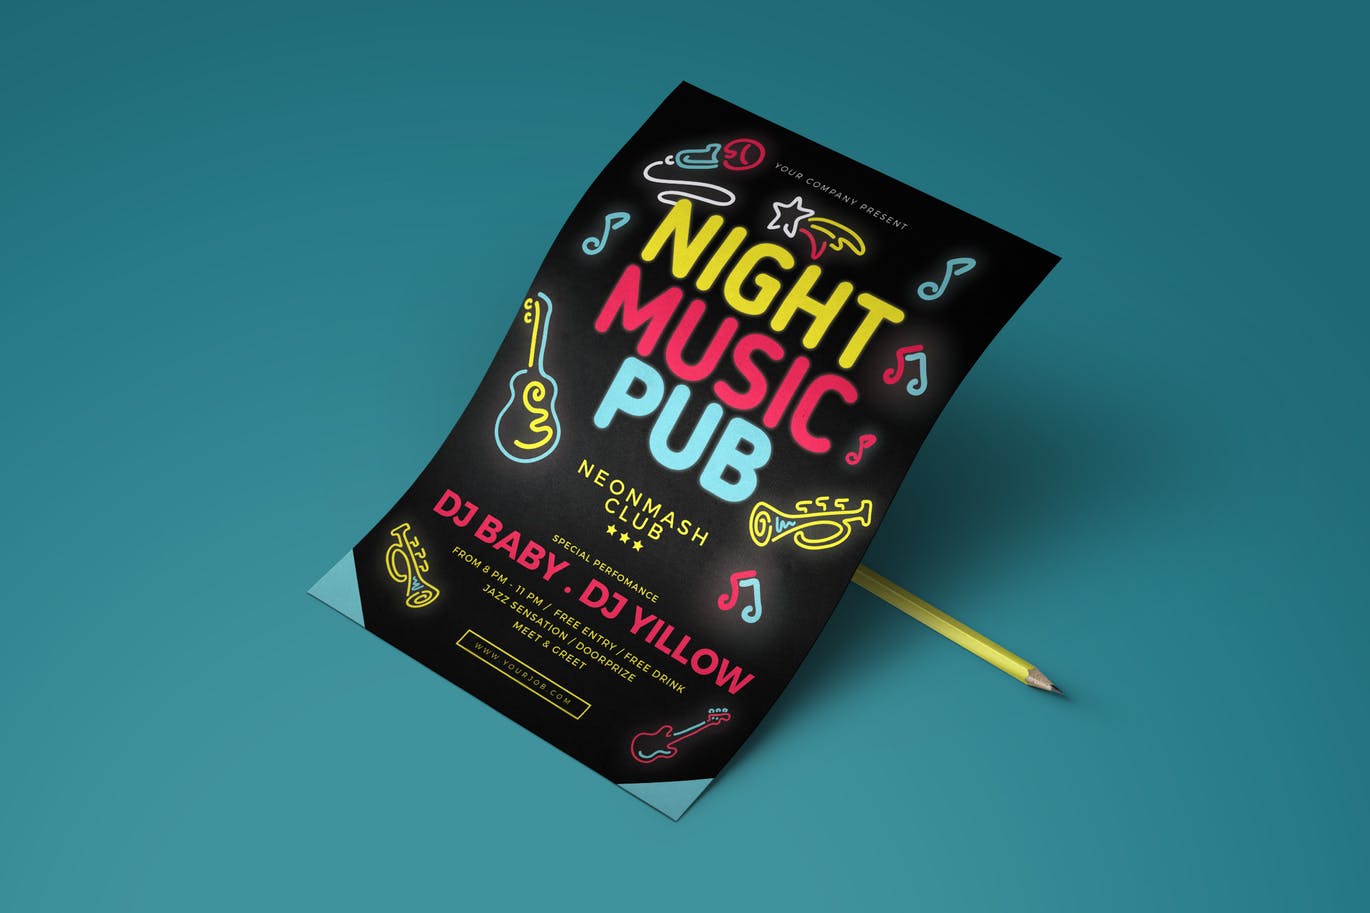 A night music pub flyer template